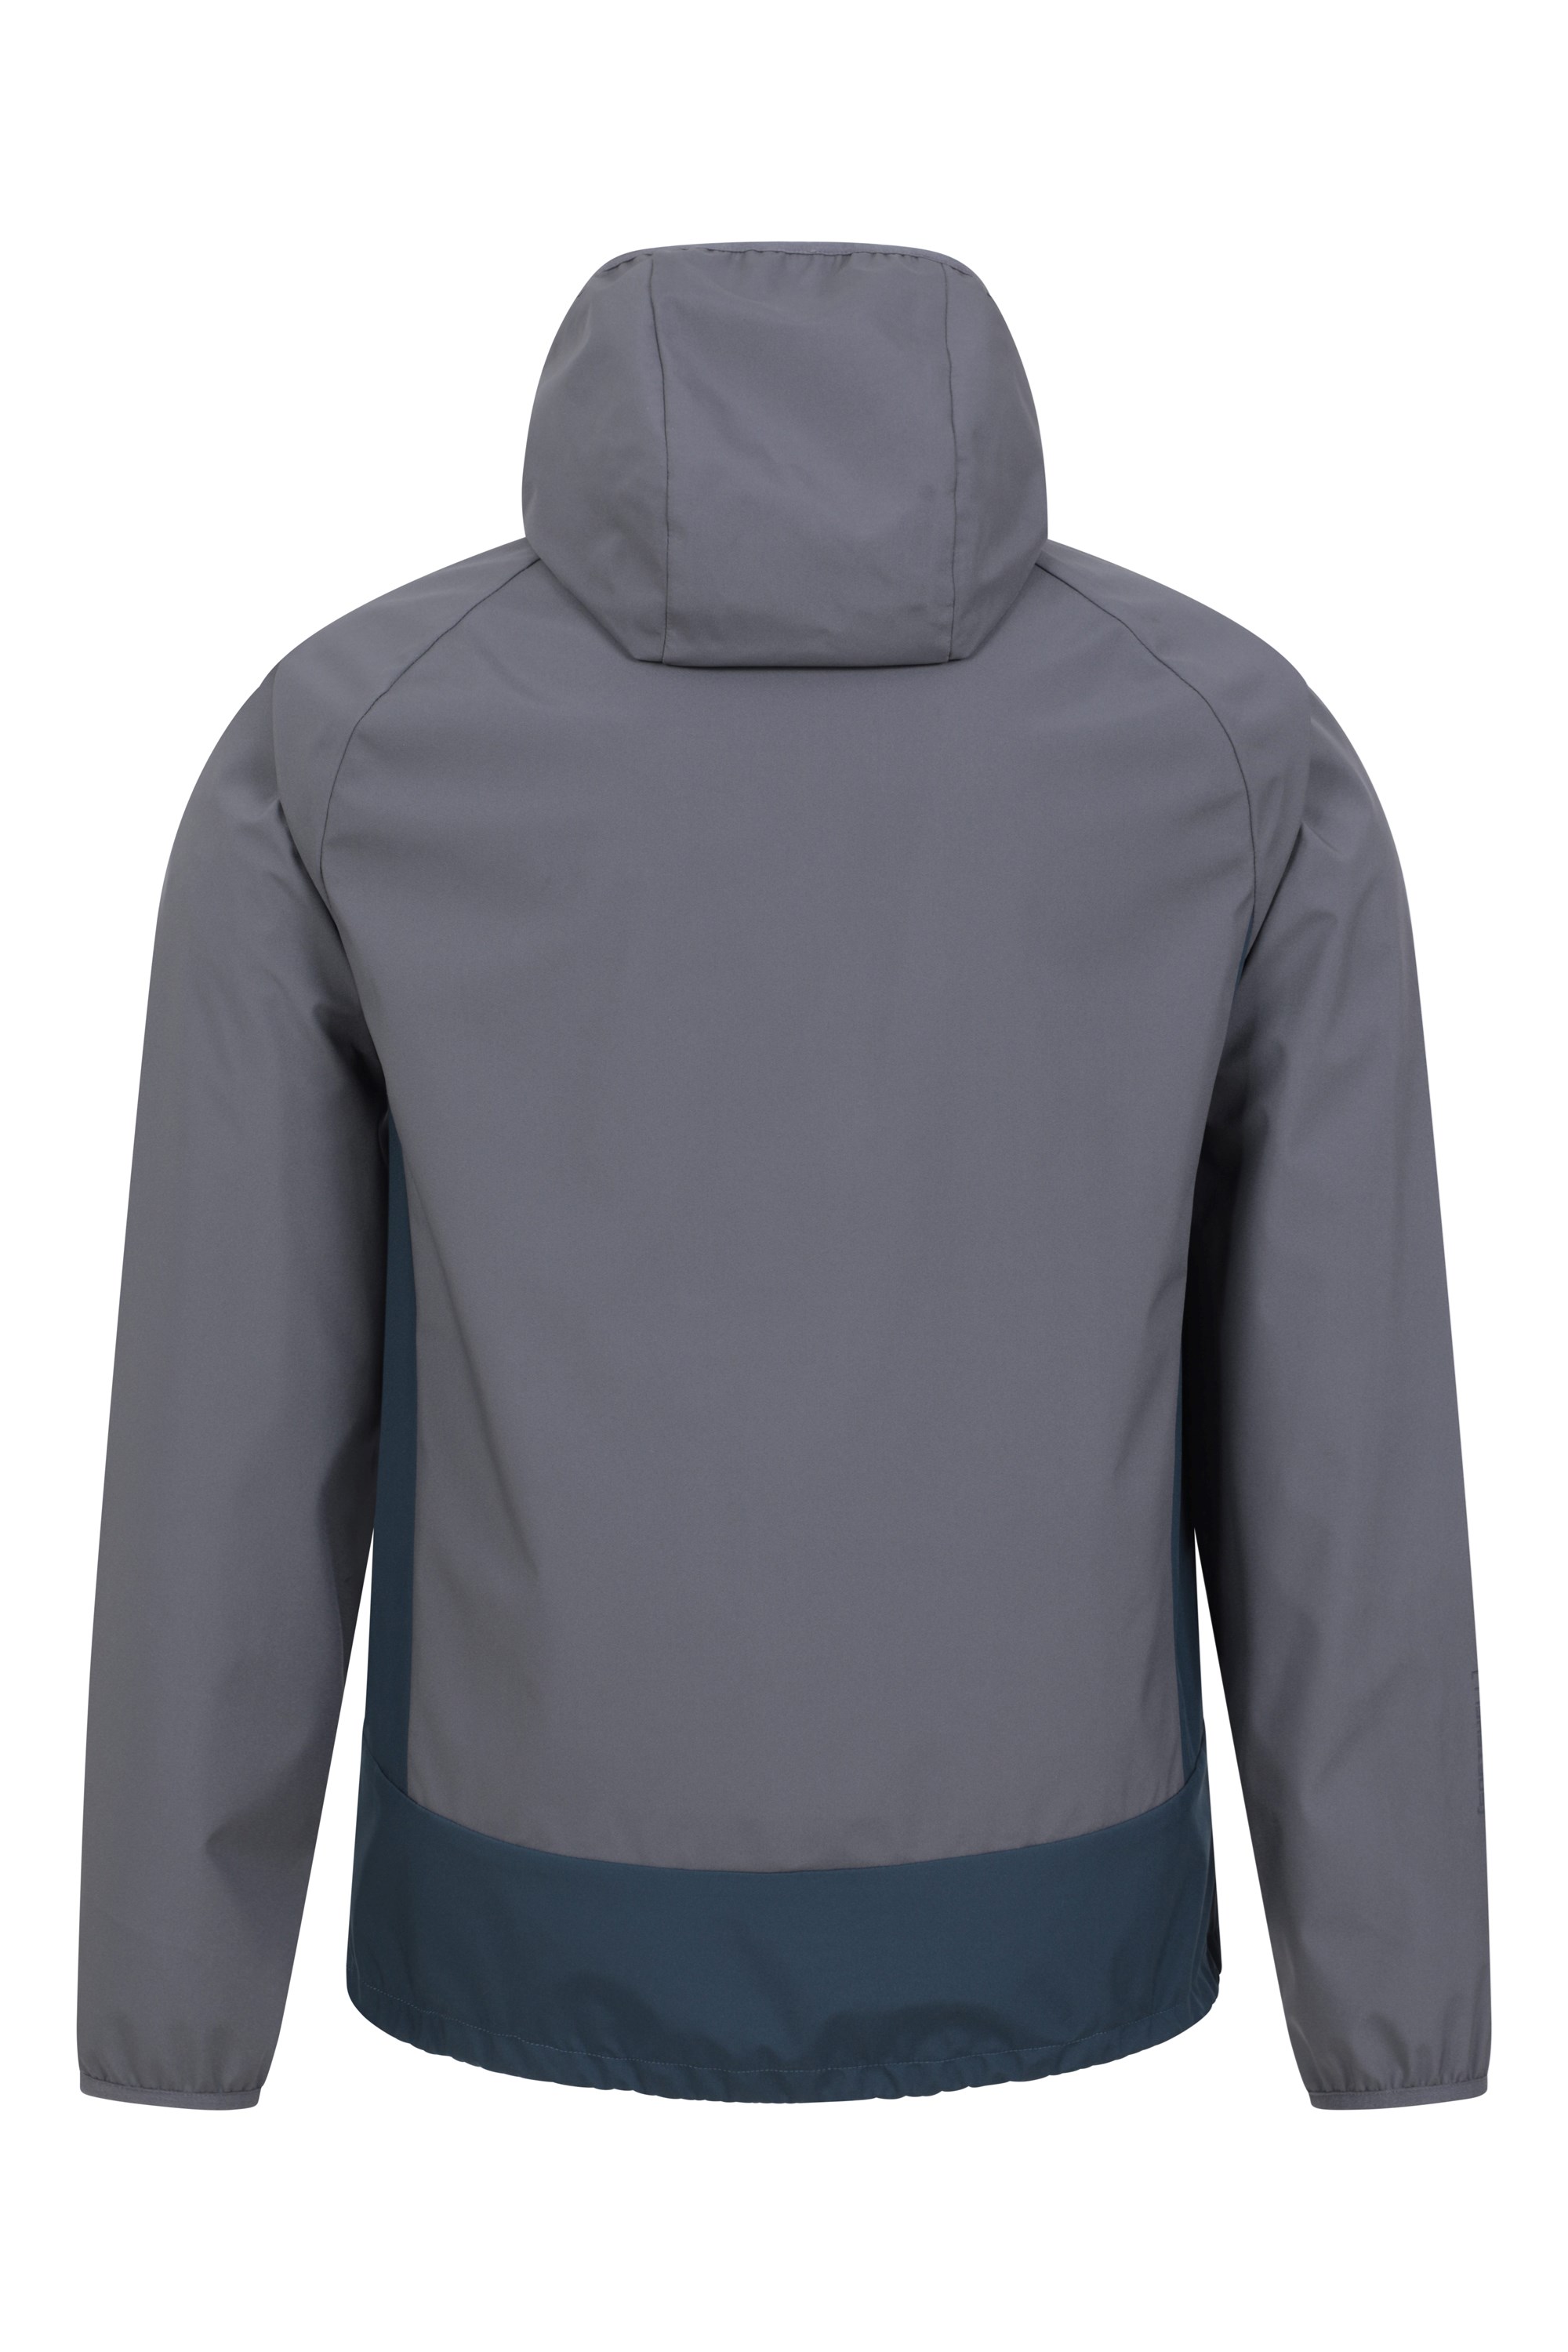 Buy World Sports Men's Polyester Sports Jacket (WS_0307_Sky Blue_M) at